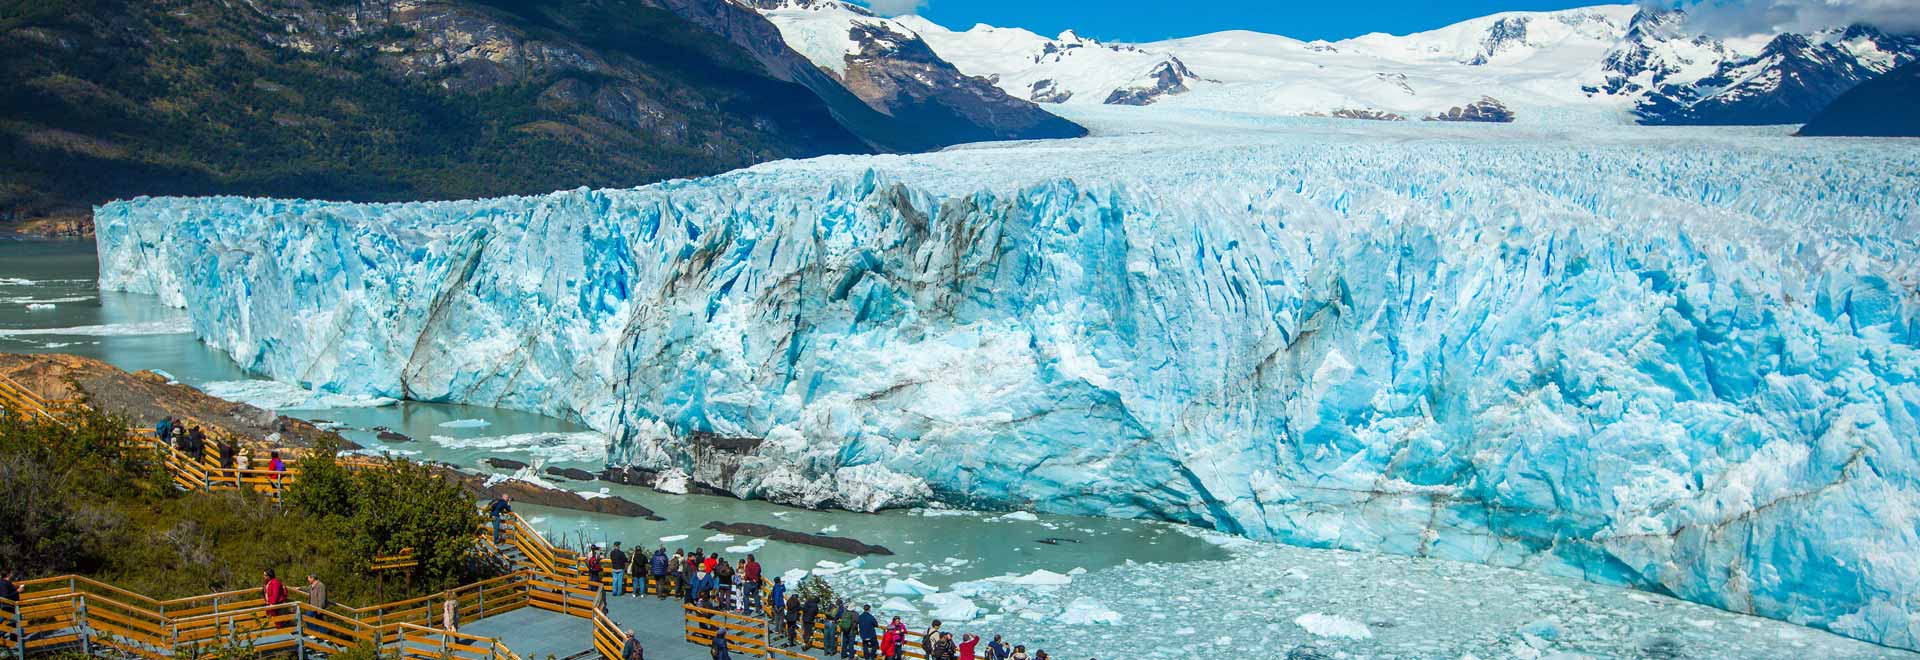 Americas TM Argentina Cultural Natural Wonders Perito Moreno Glacier MH